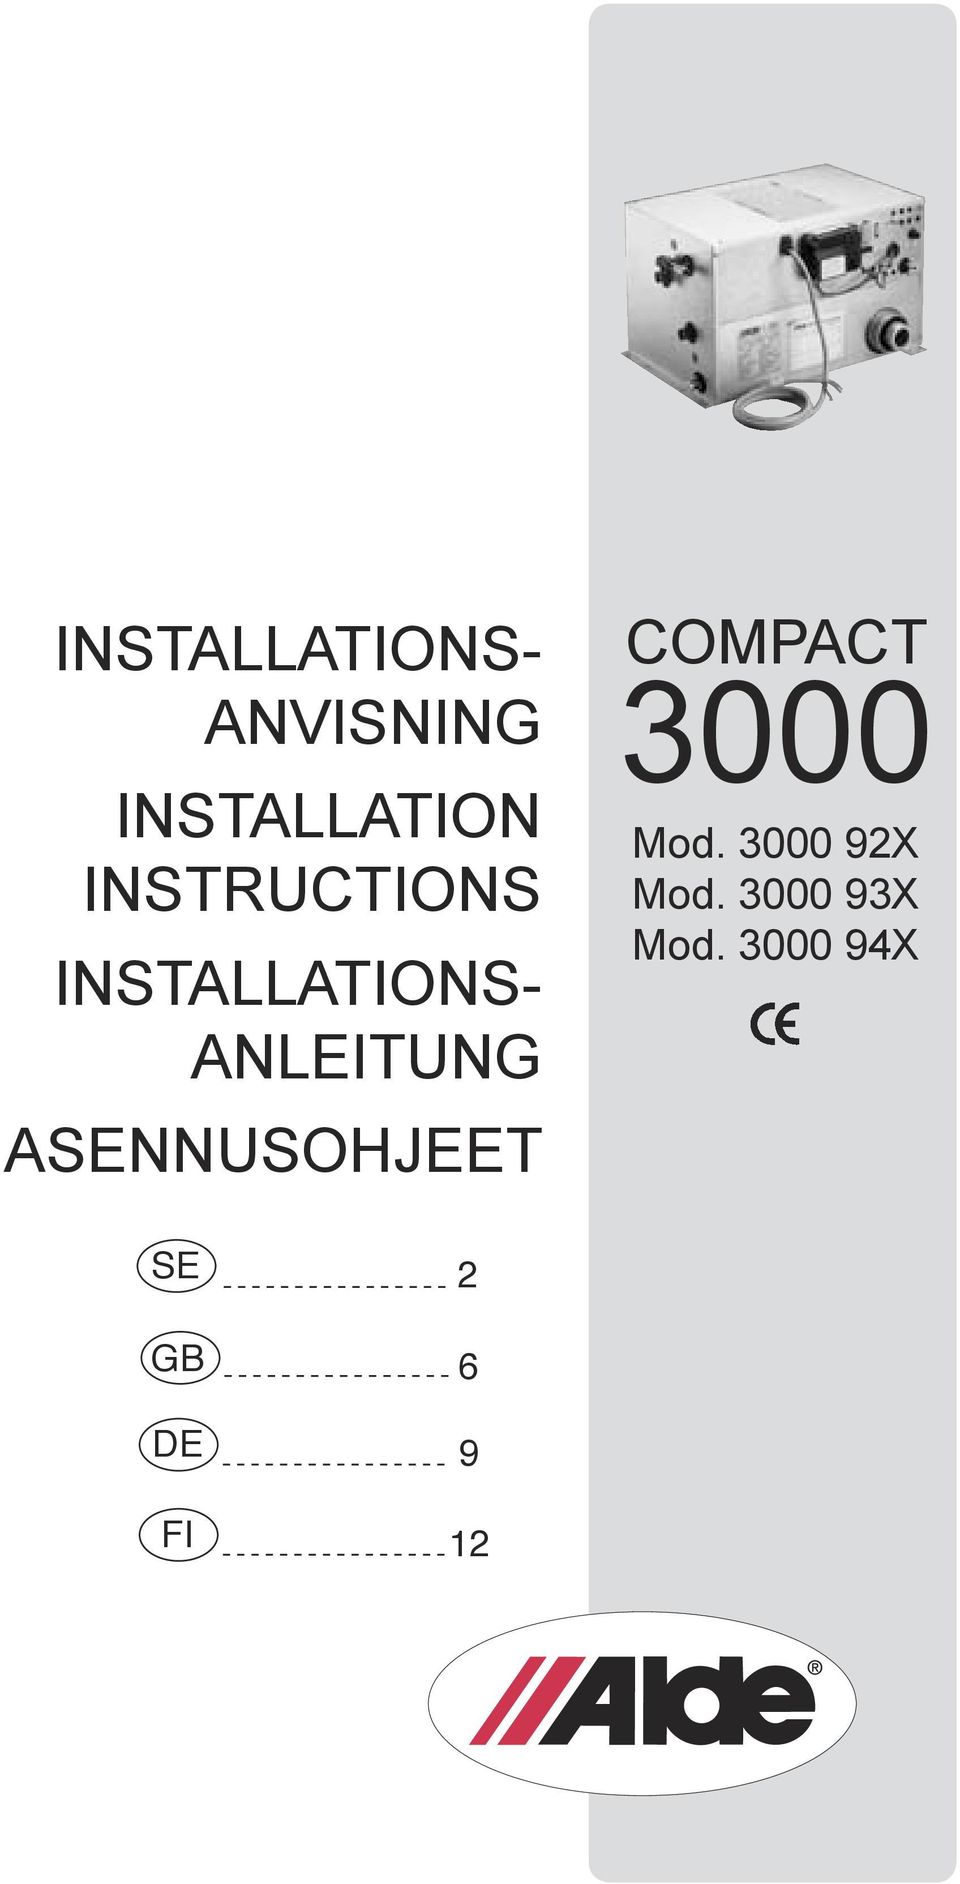 ASENNUSOHJEET COMPACT 3000 Mod.